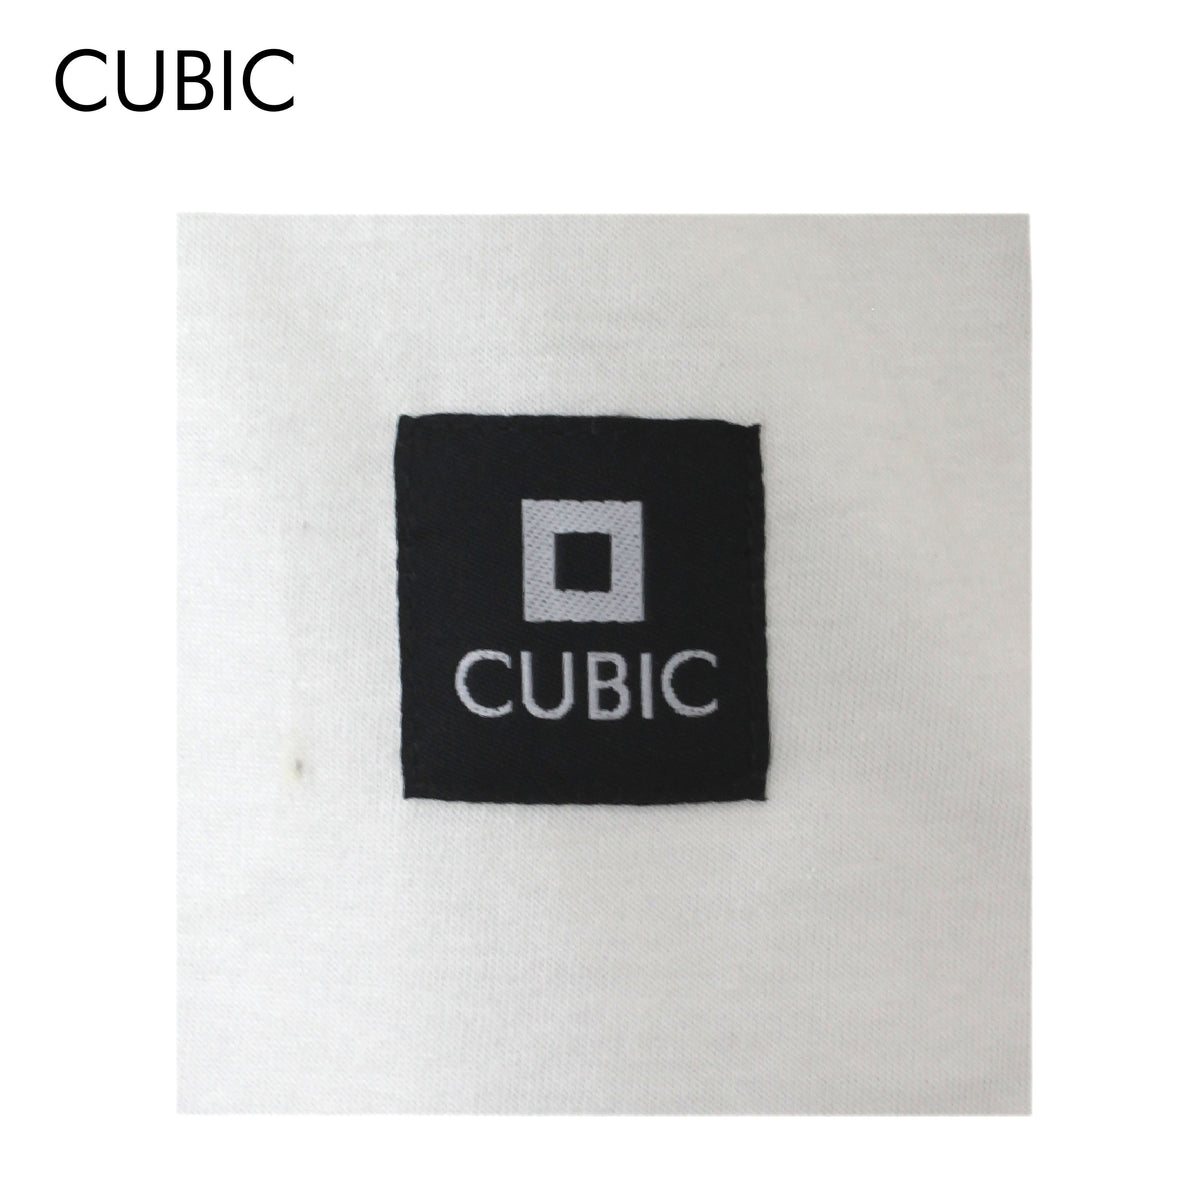 Cubic Mens Round Neck Tees T-Shirt Plain Shirt Top Top for Men - CMJ2355R